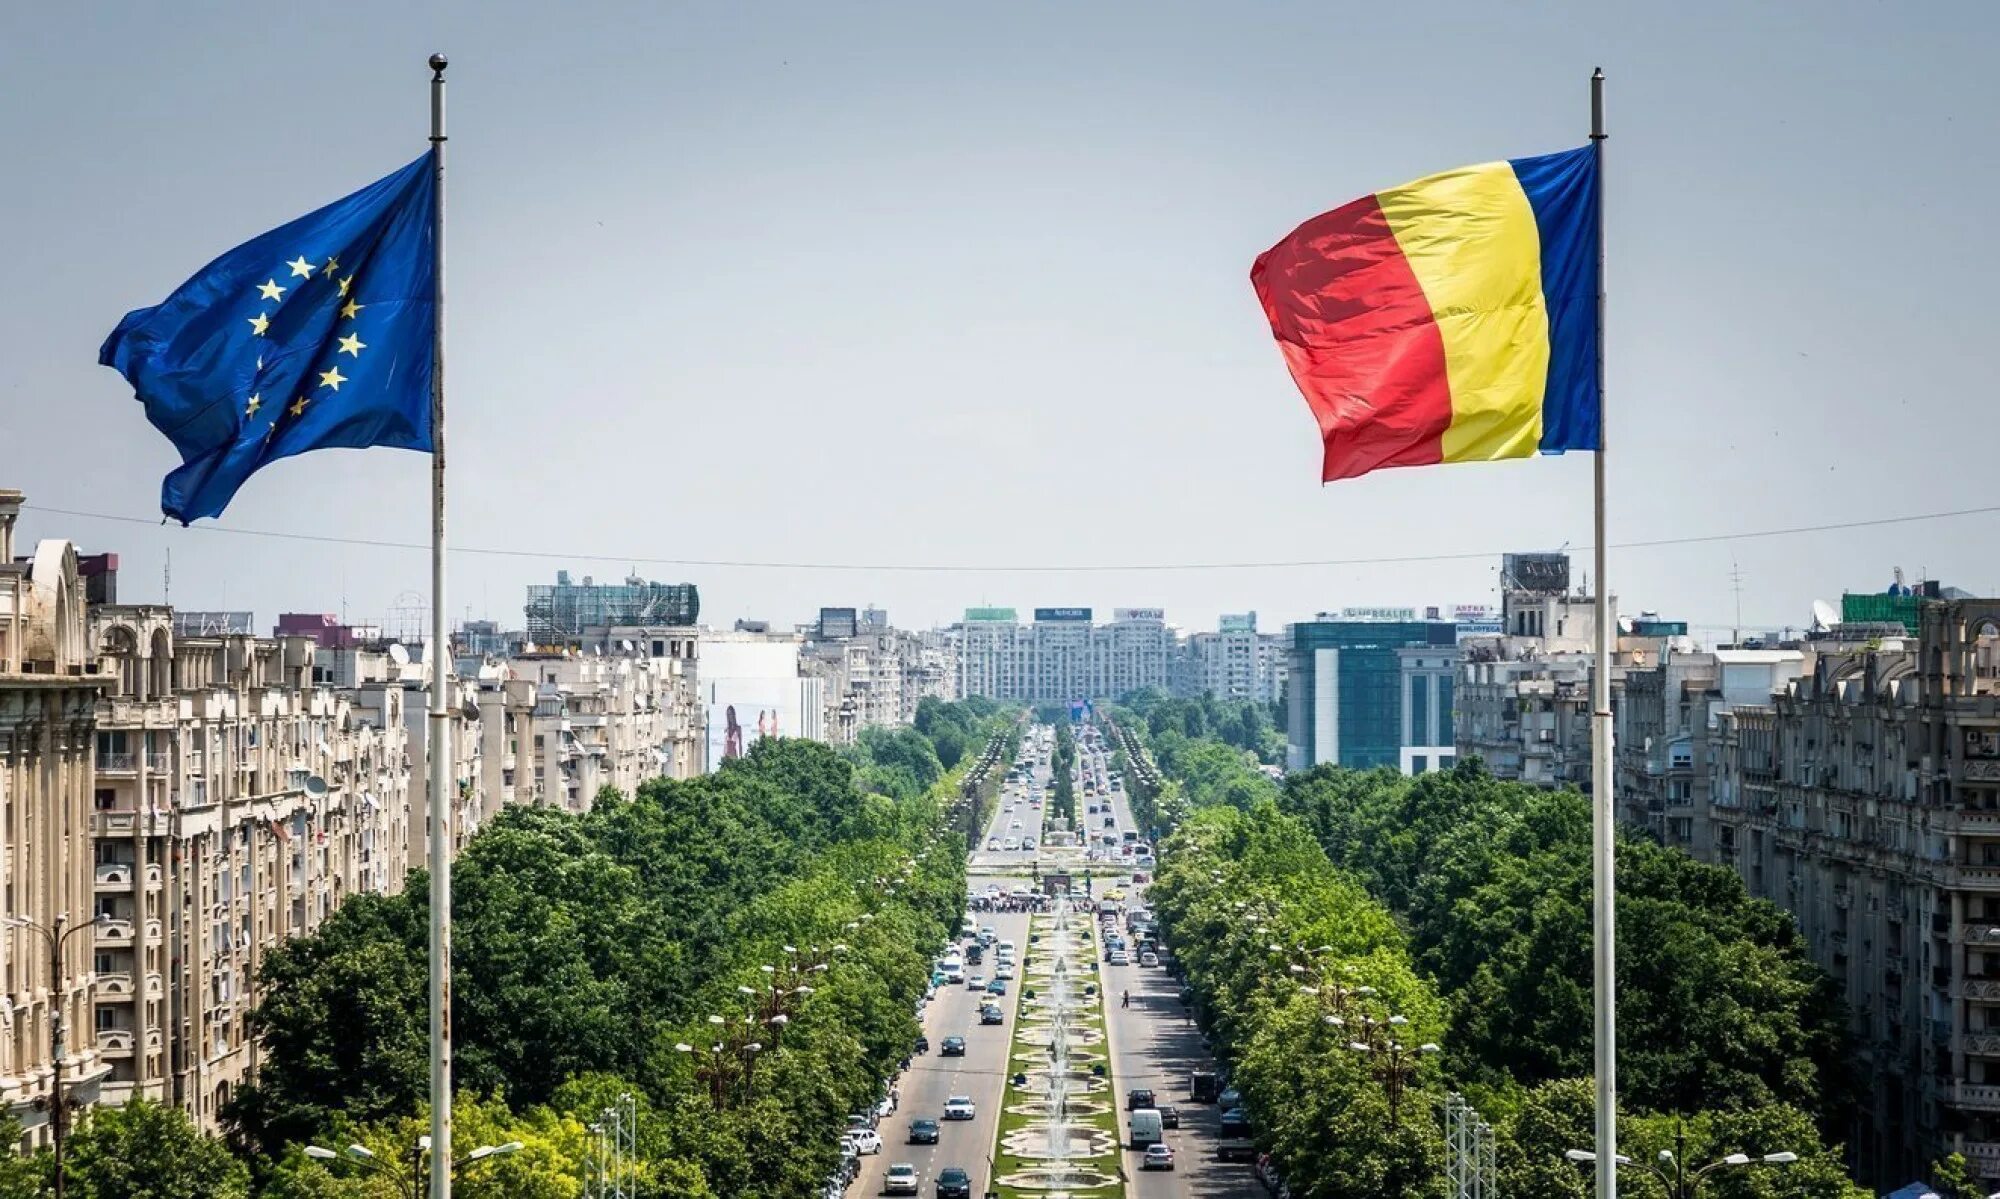 Румыния Бухарест. Румыния Бухарест флаг. Румыния пойтахти. Бухарест столица Румынии флаг. Румыния уровень жизни